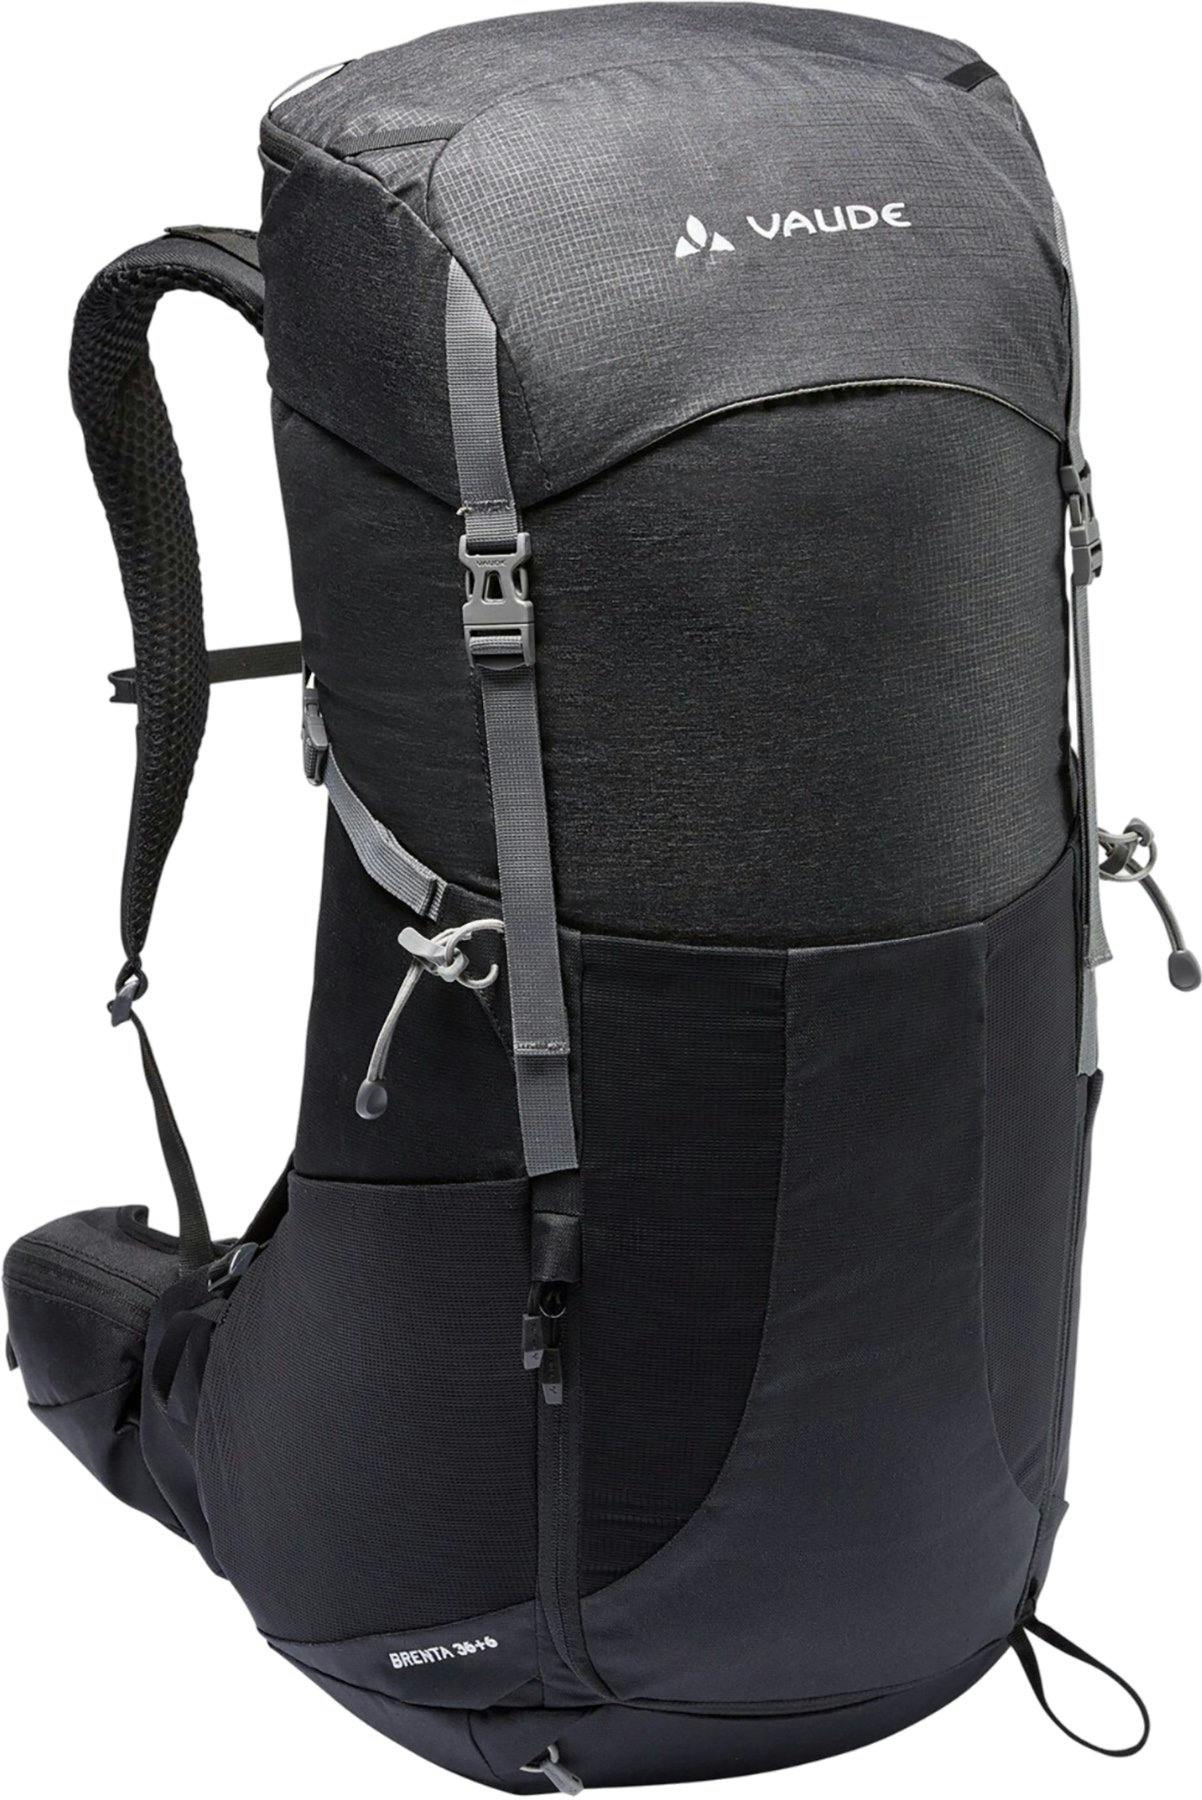 Product image for Brenta Hiking Backpack 36+6L - Unisex